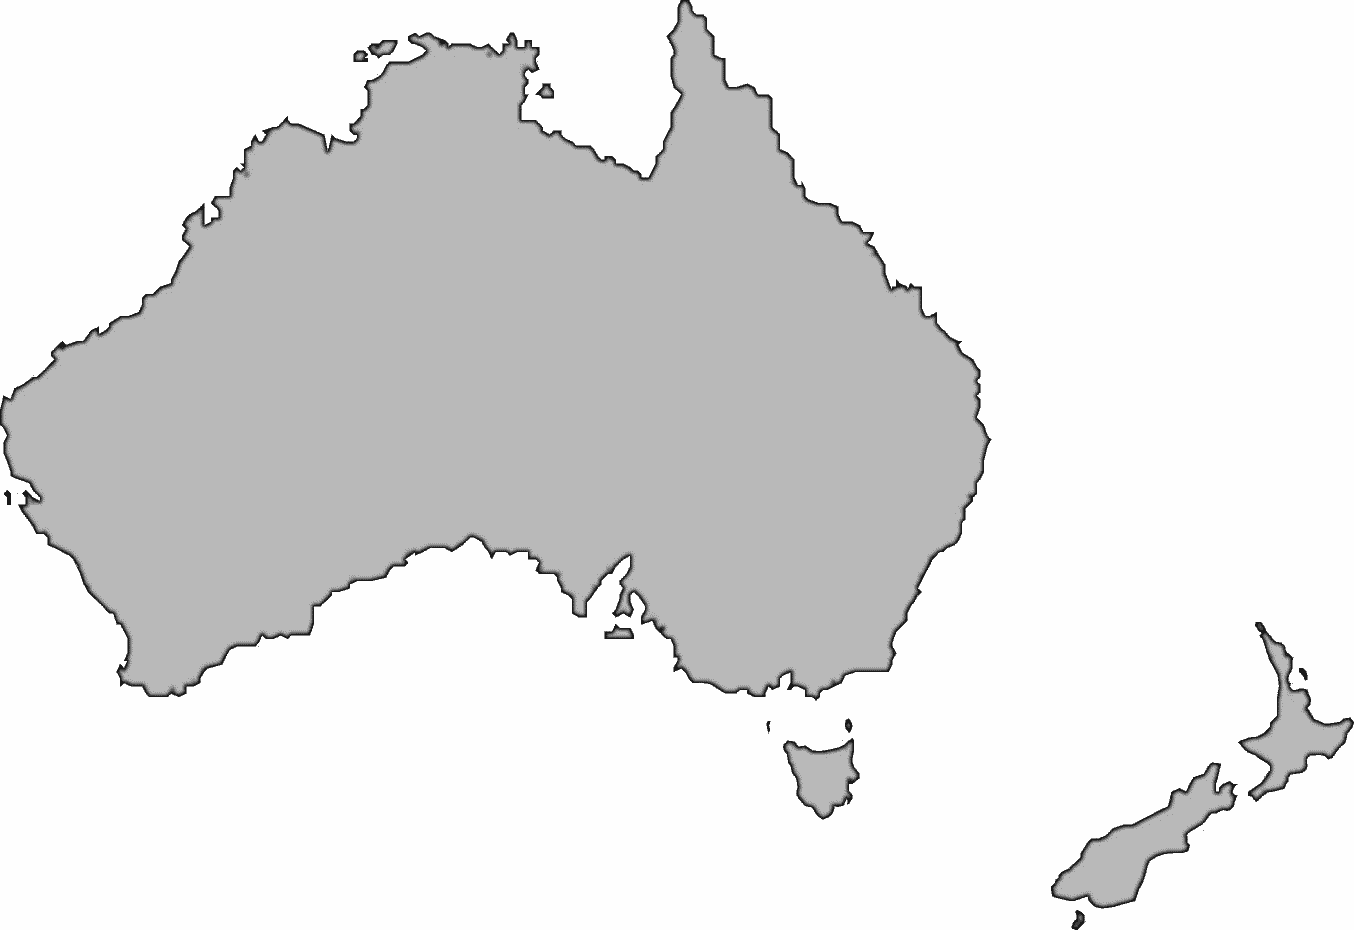 Australia large